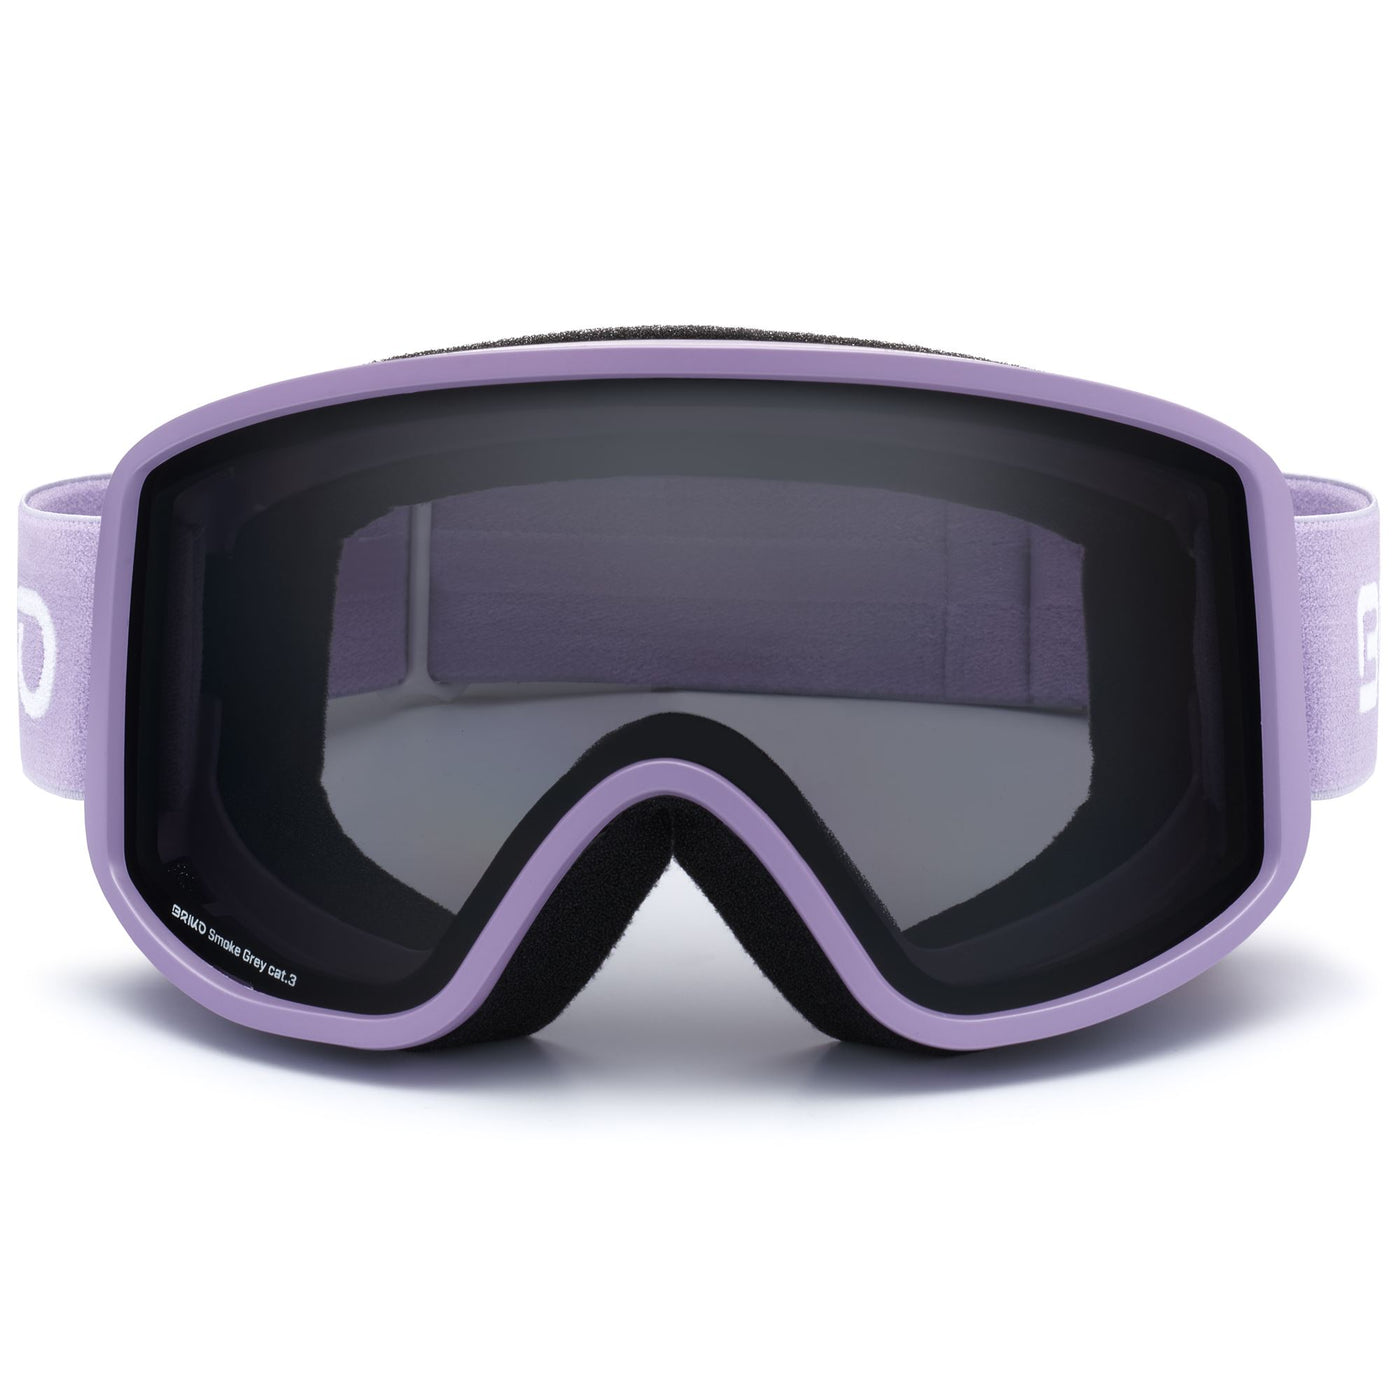 Goggles Unisex HOMER Ski  Goggles VIOLET EAST SIDE -SG3 Photo (jpg Rgb)			